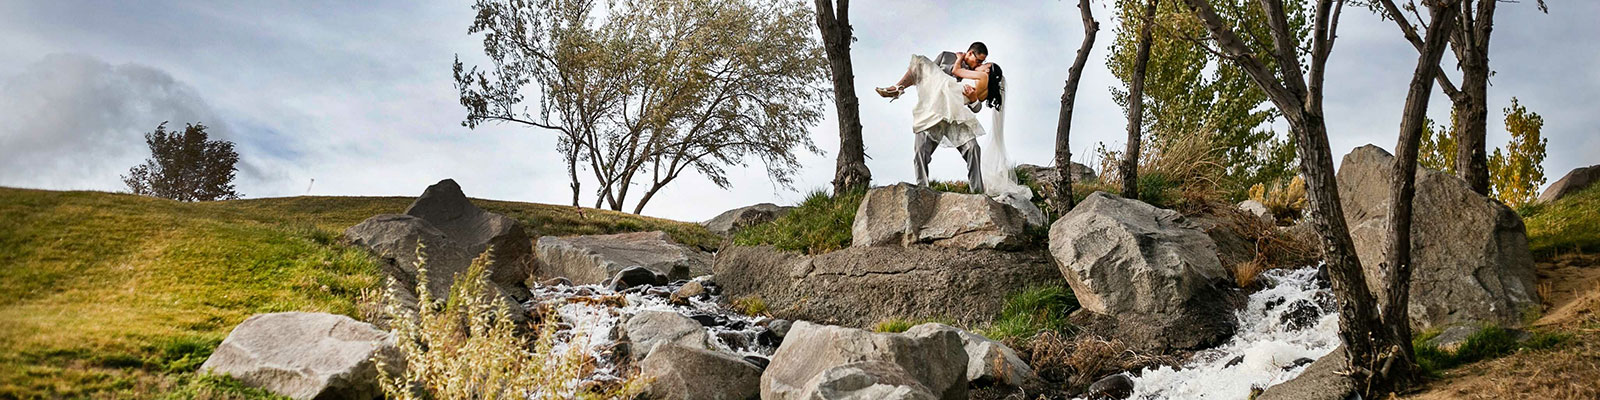 wedding couple in a romantic embrace near stream at Sunridge Golf Course